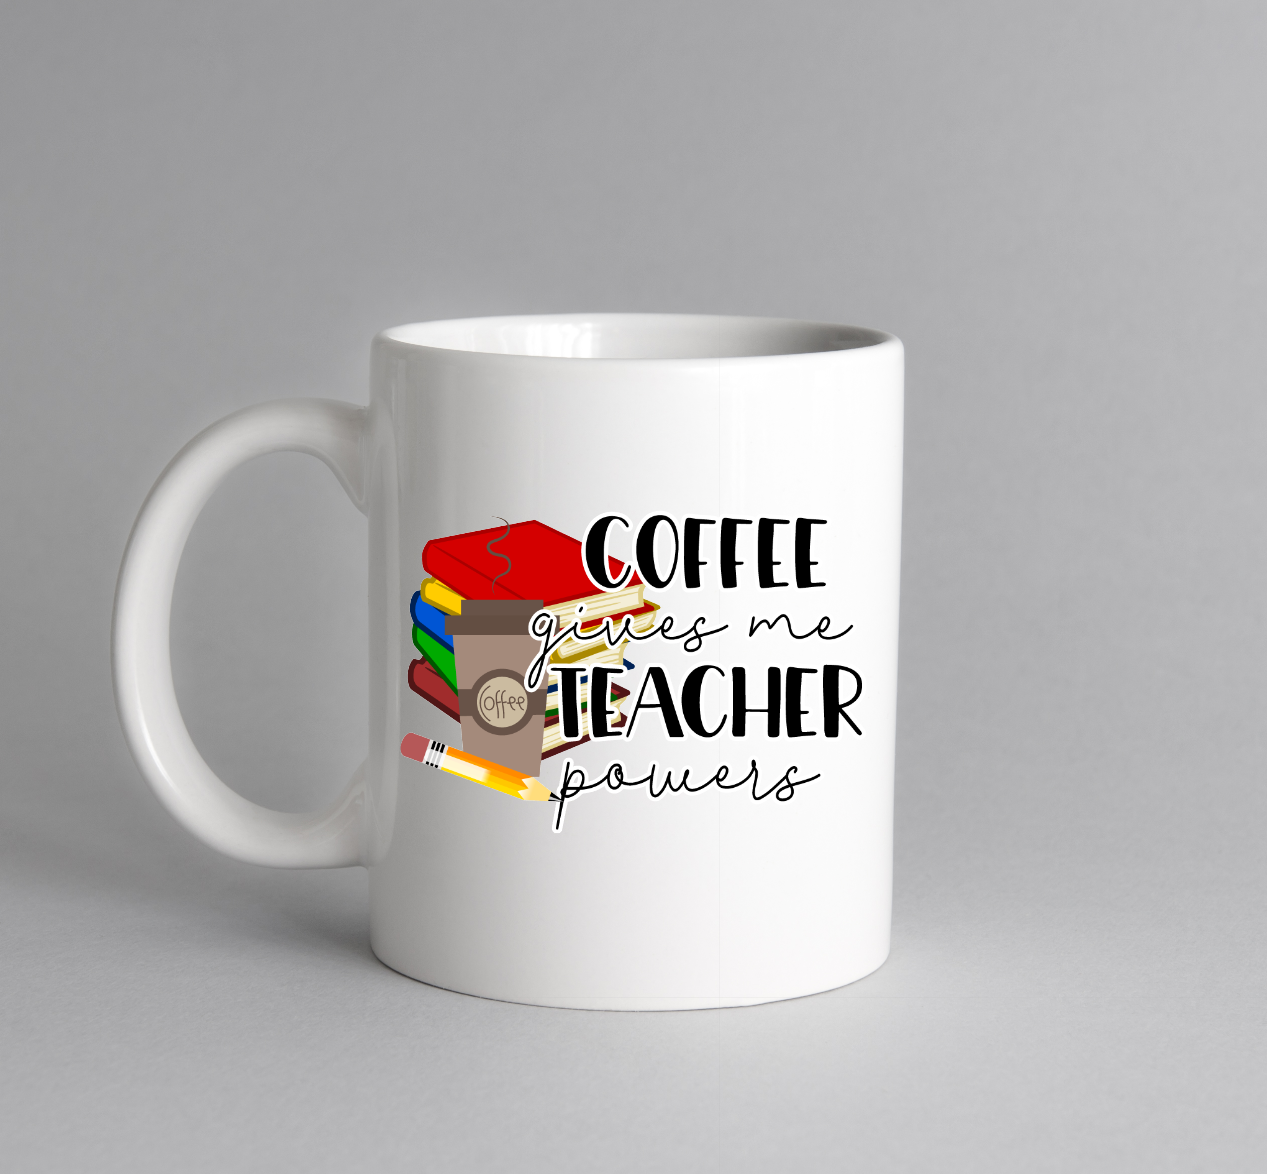 Coffee Gives Me Teacher Powers Coffee Cup